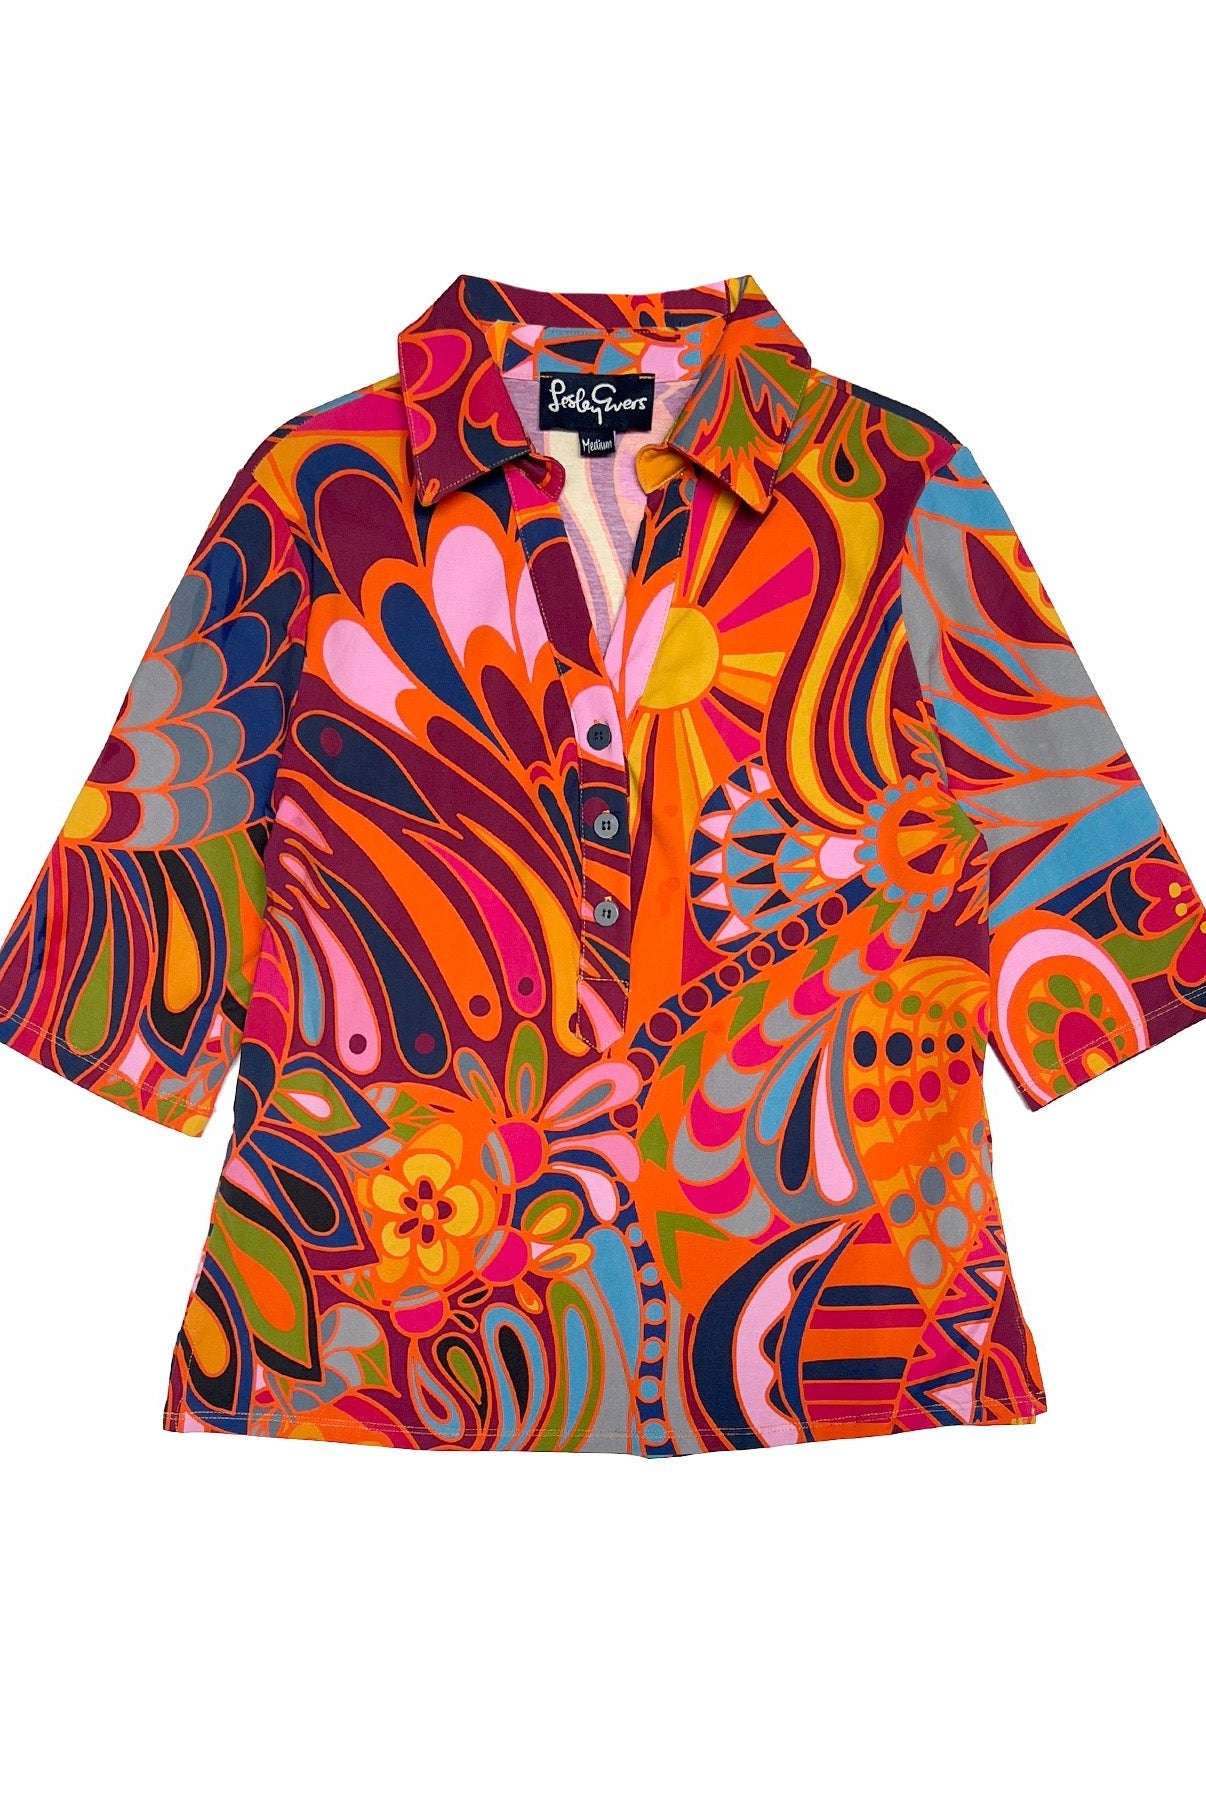 KIMMY top Shakalaka Orange - Lesley Evers-Button Top-clothing-colorful